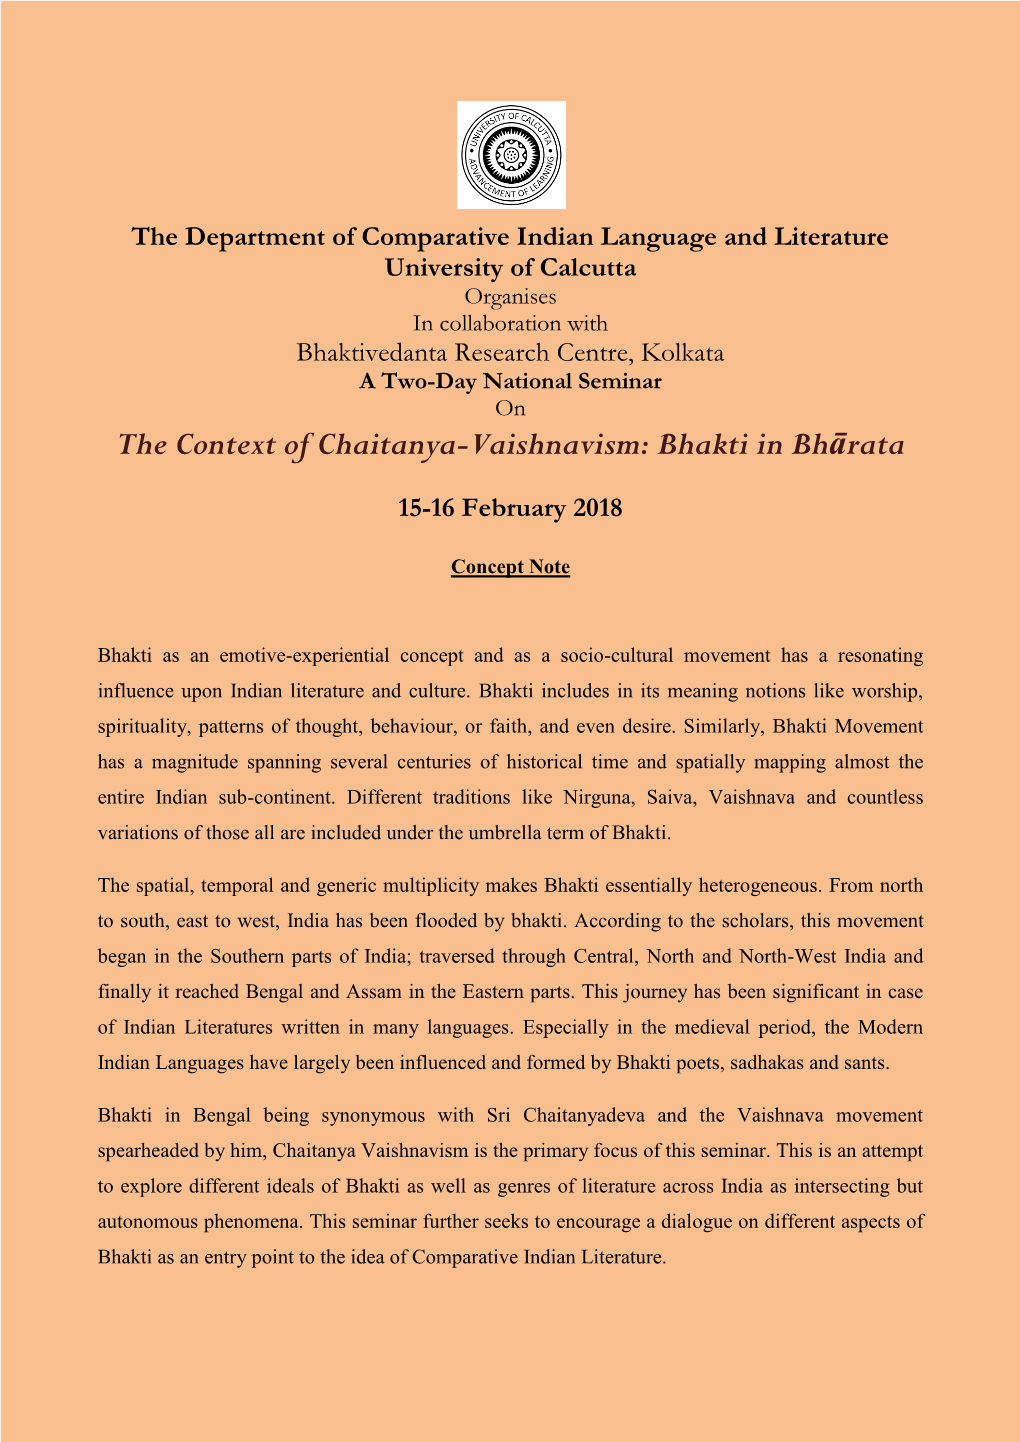 The Context of Chaitanya-Vaishnavism: Bhakti in Bhārata